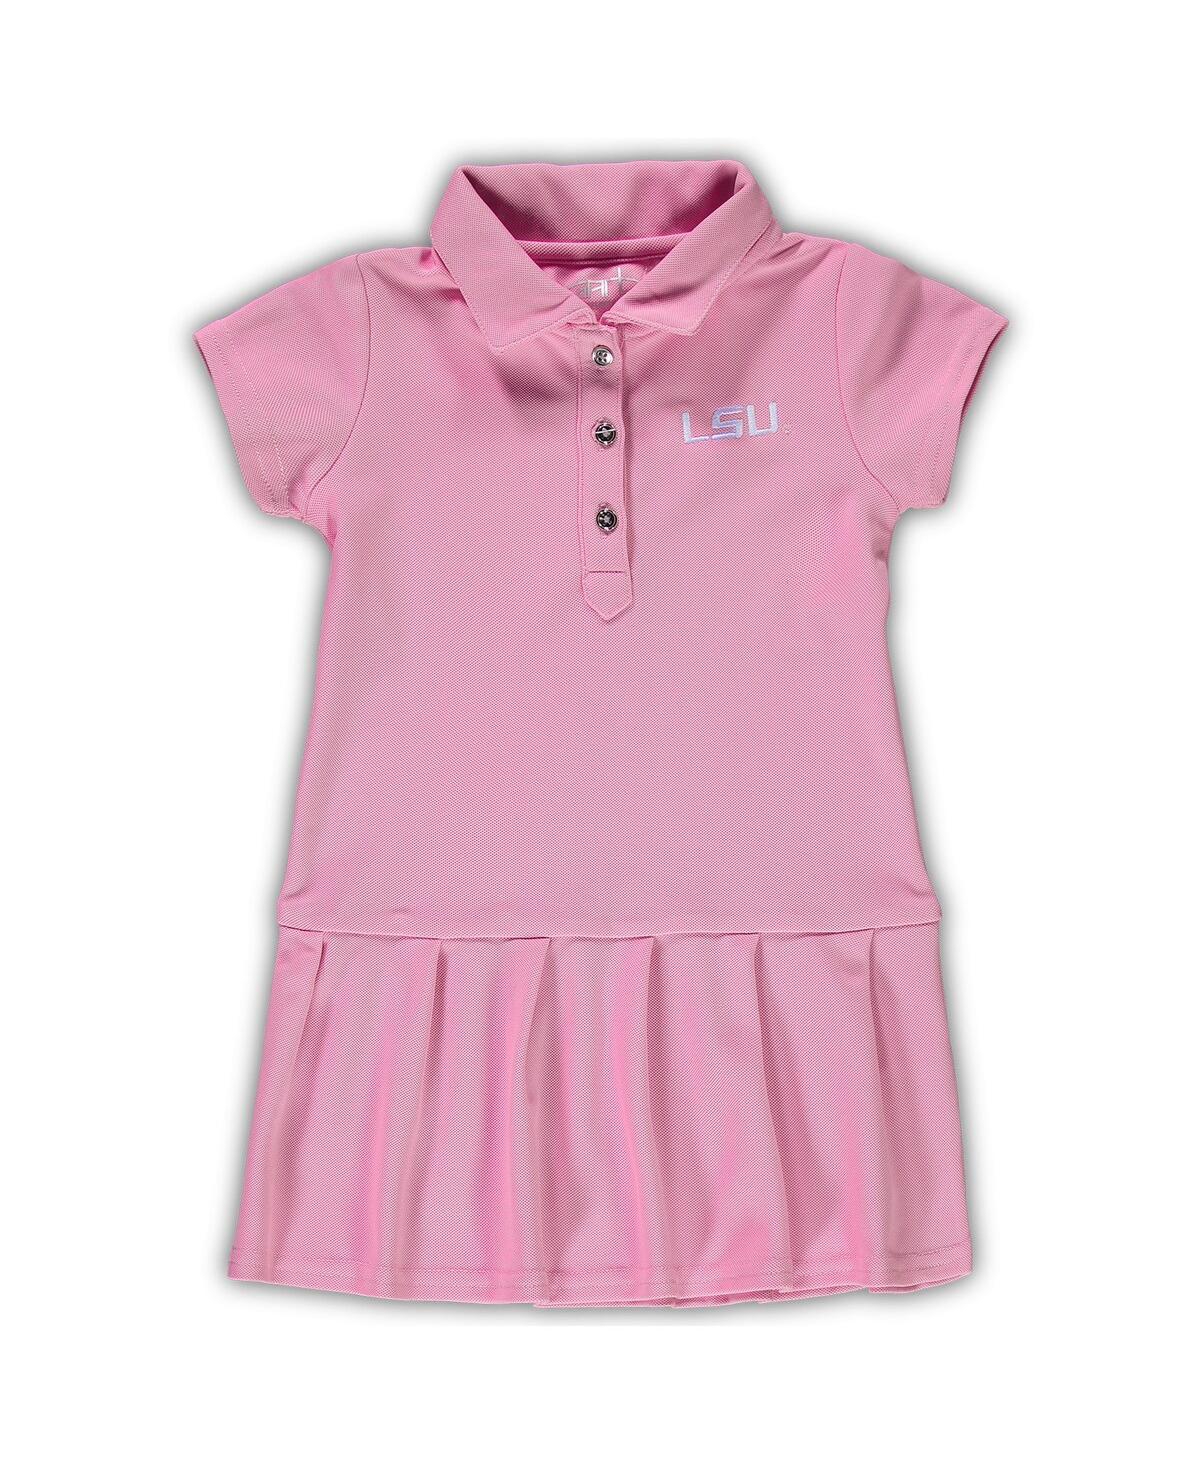 Garb Babies' Toddler Girls  Pink Lsu Tigers Caroline Cap Sleeve Polo Shirt Dress